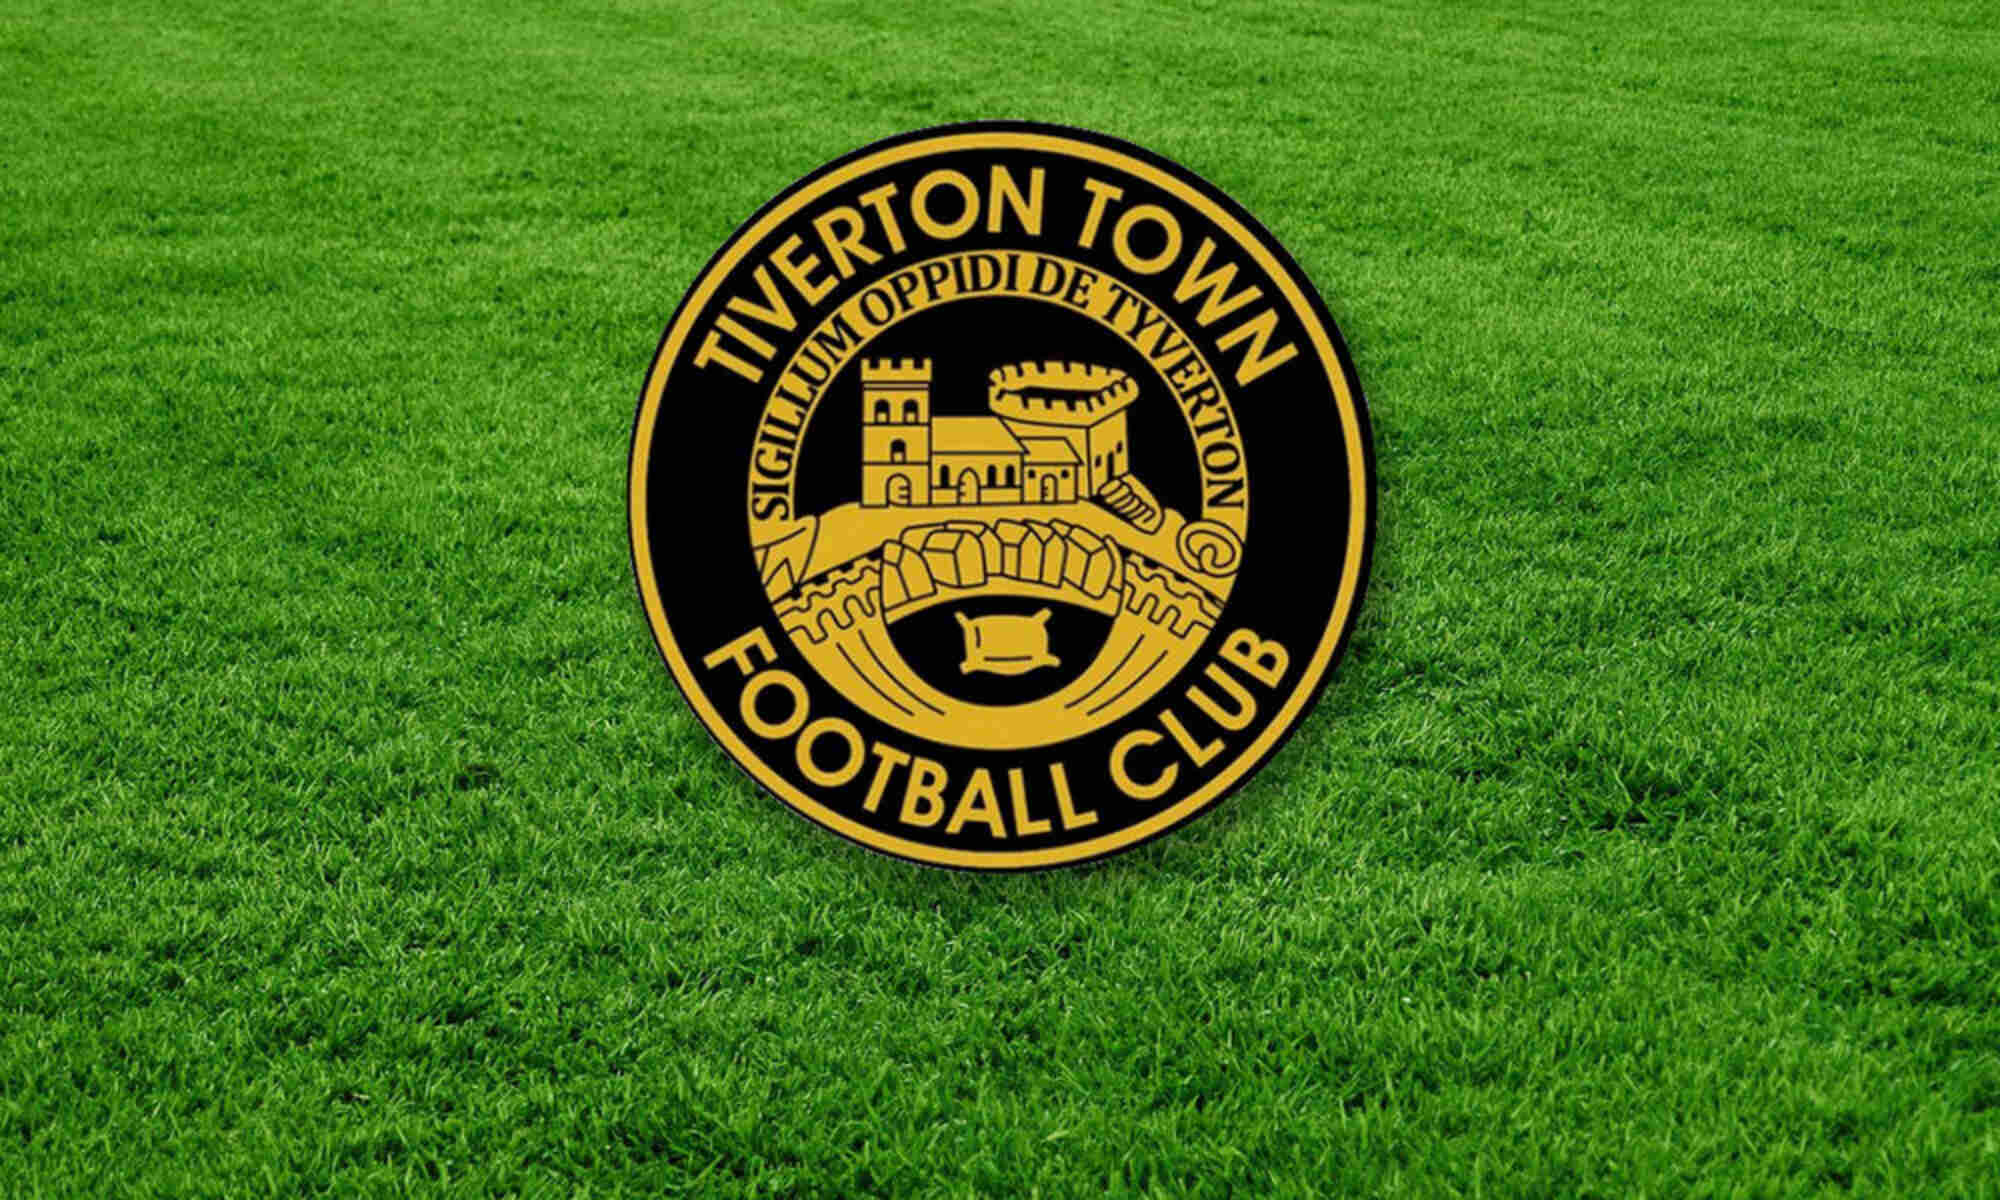 tiverton-town-fc-19-football-club-facts